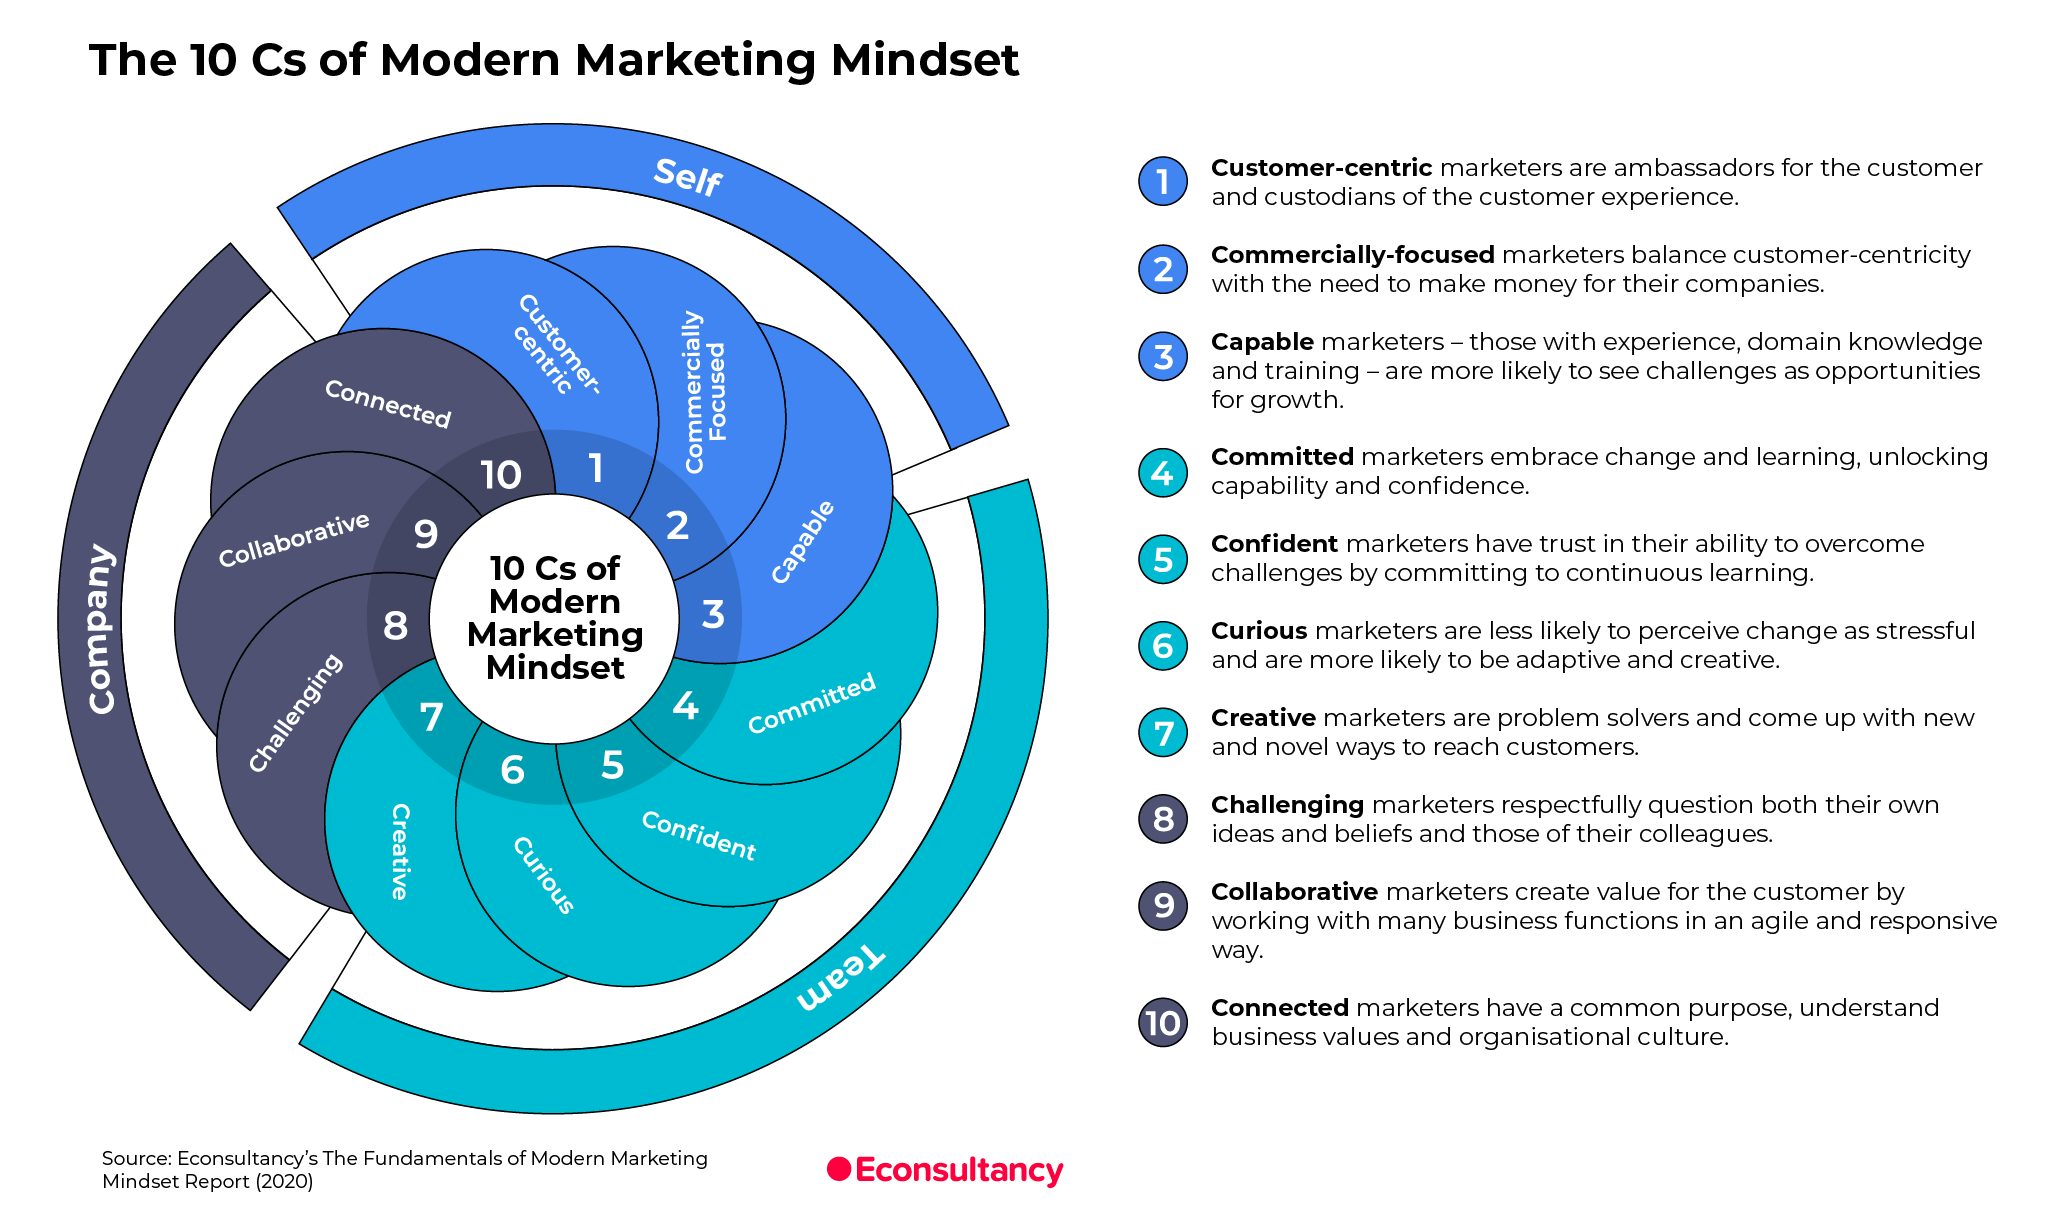 The 10Cs of Modern Marketing Mindset